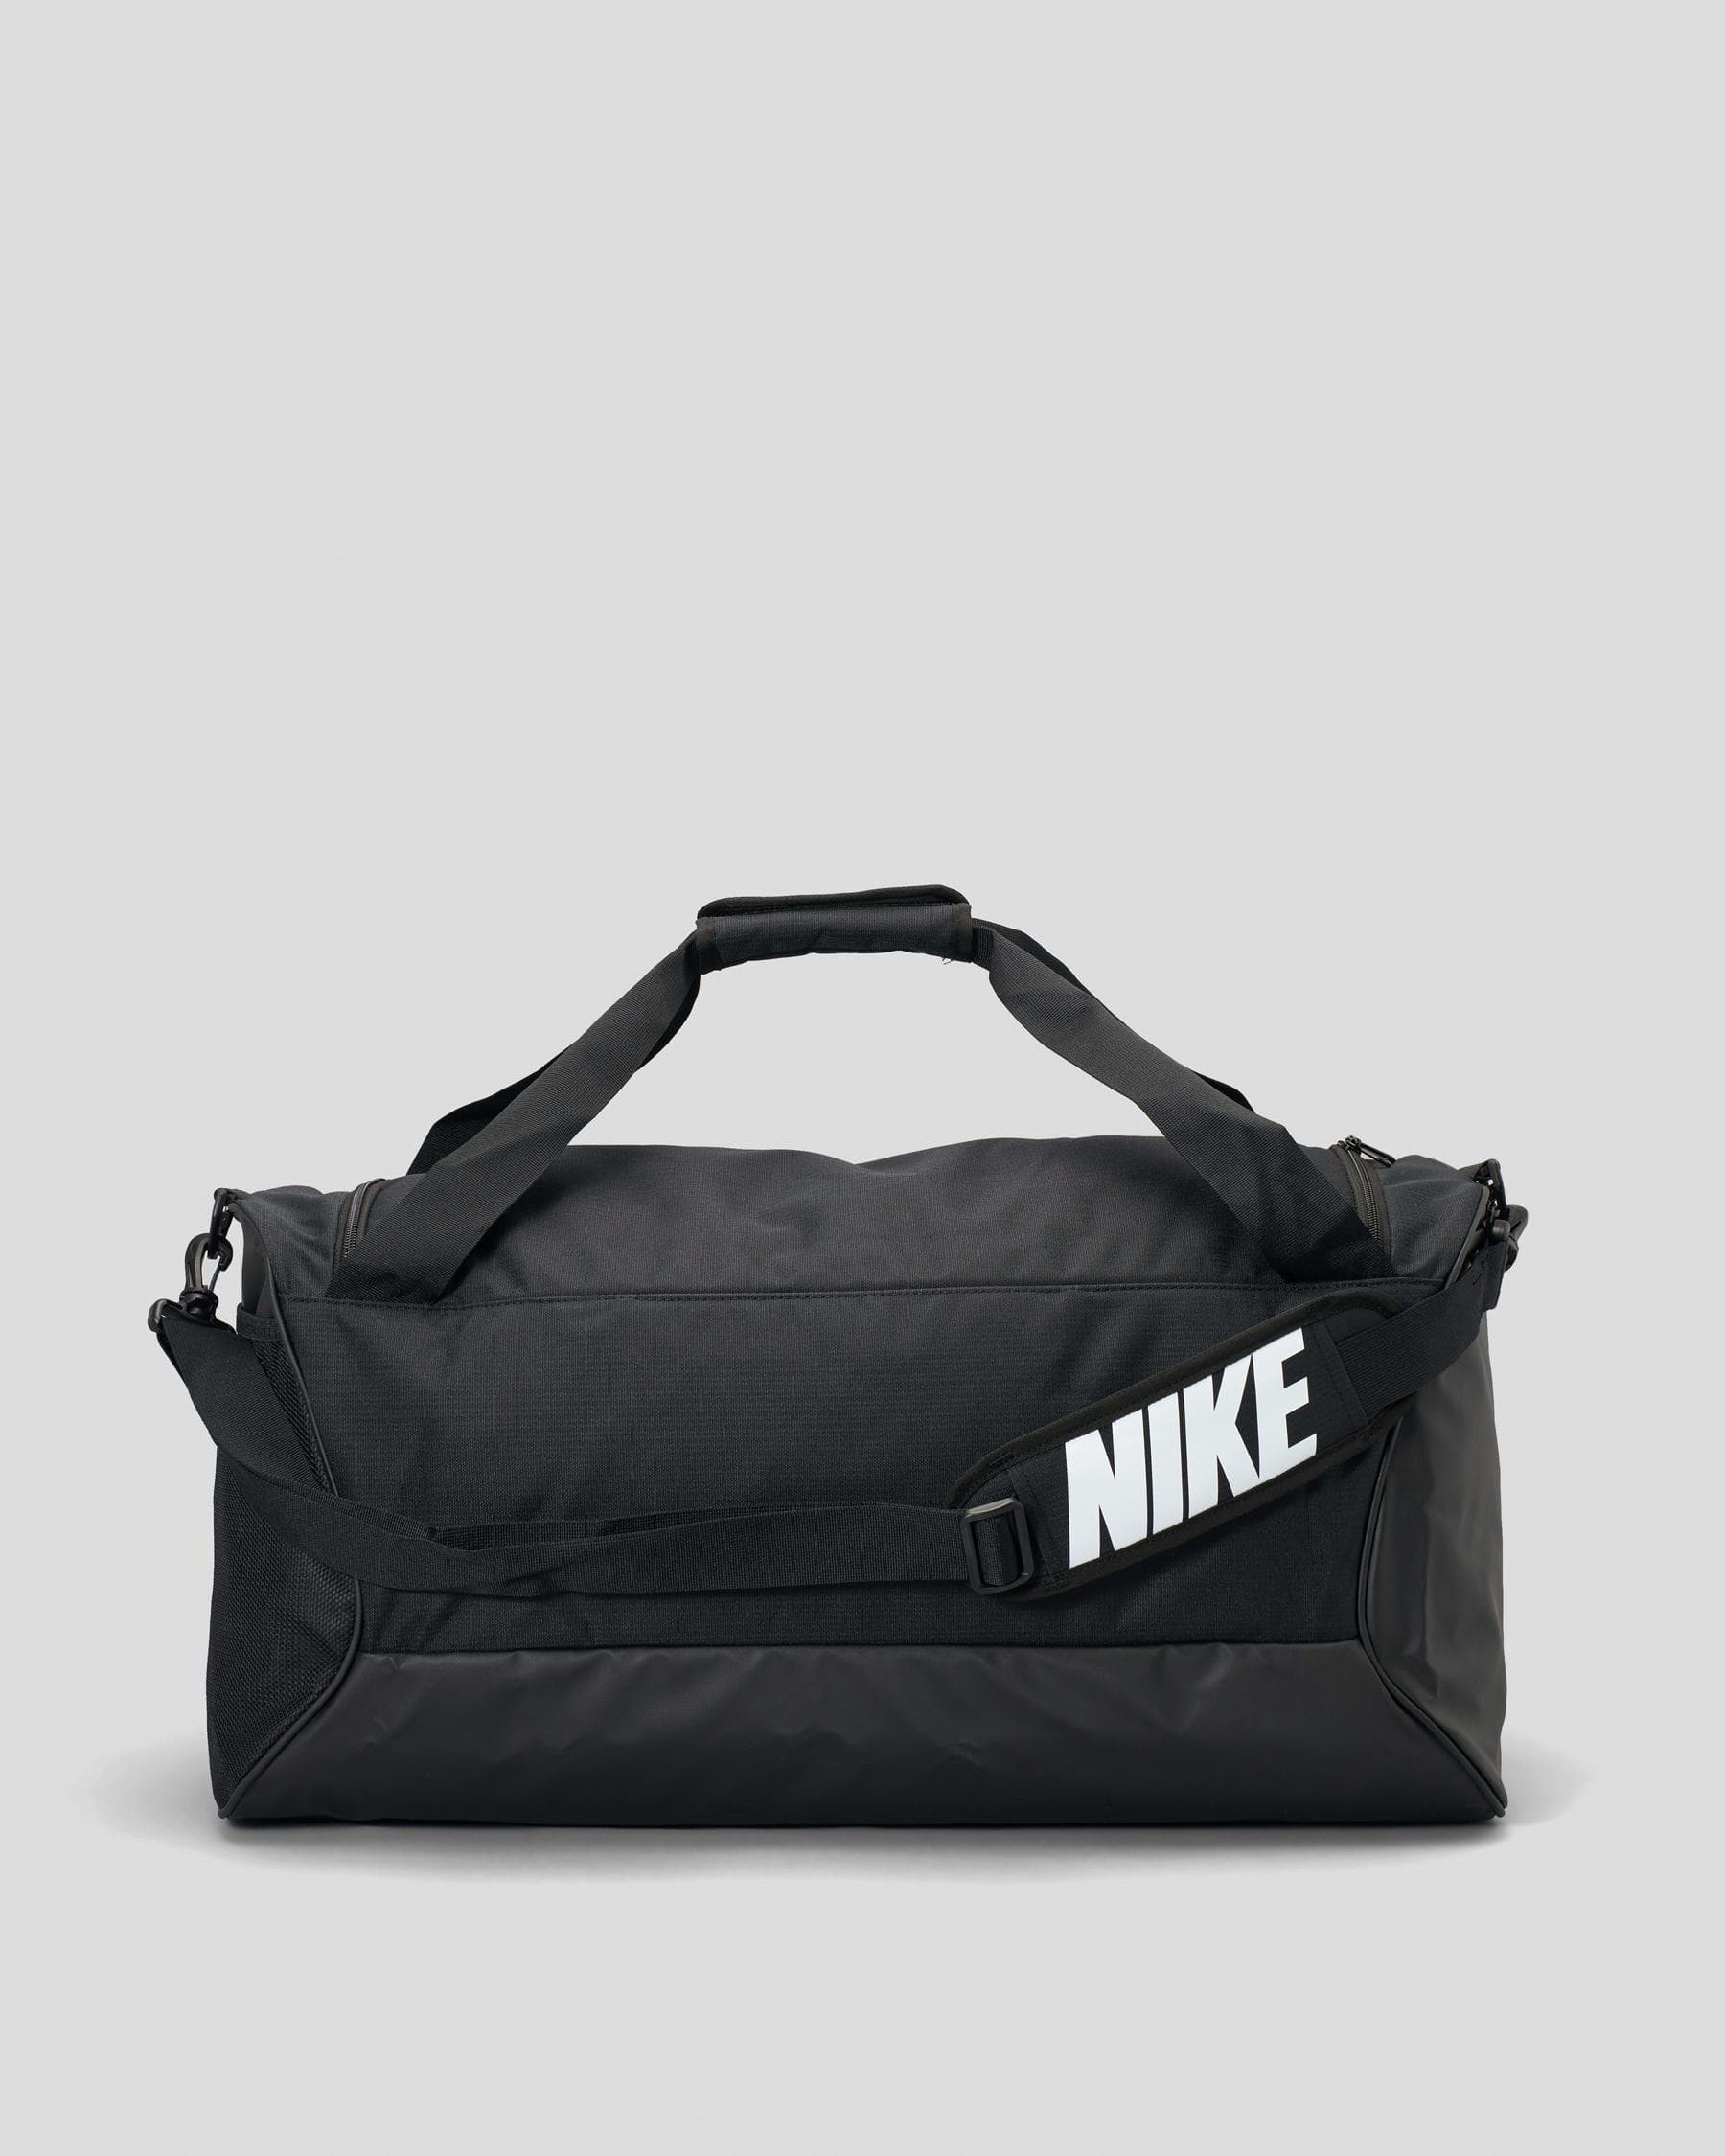 Nike Brasilia 9.5 Duffle Bag In Black/black/white - Fast Shipping & Easy Returns City Beach Australia